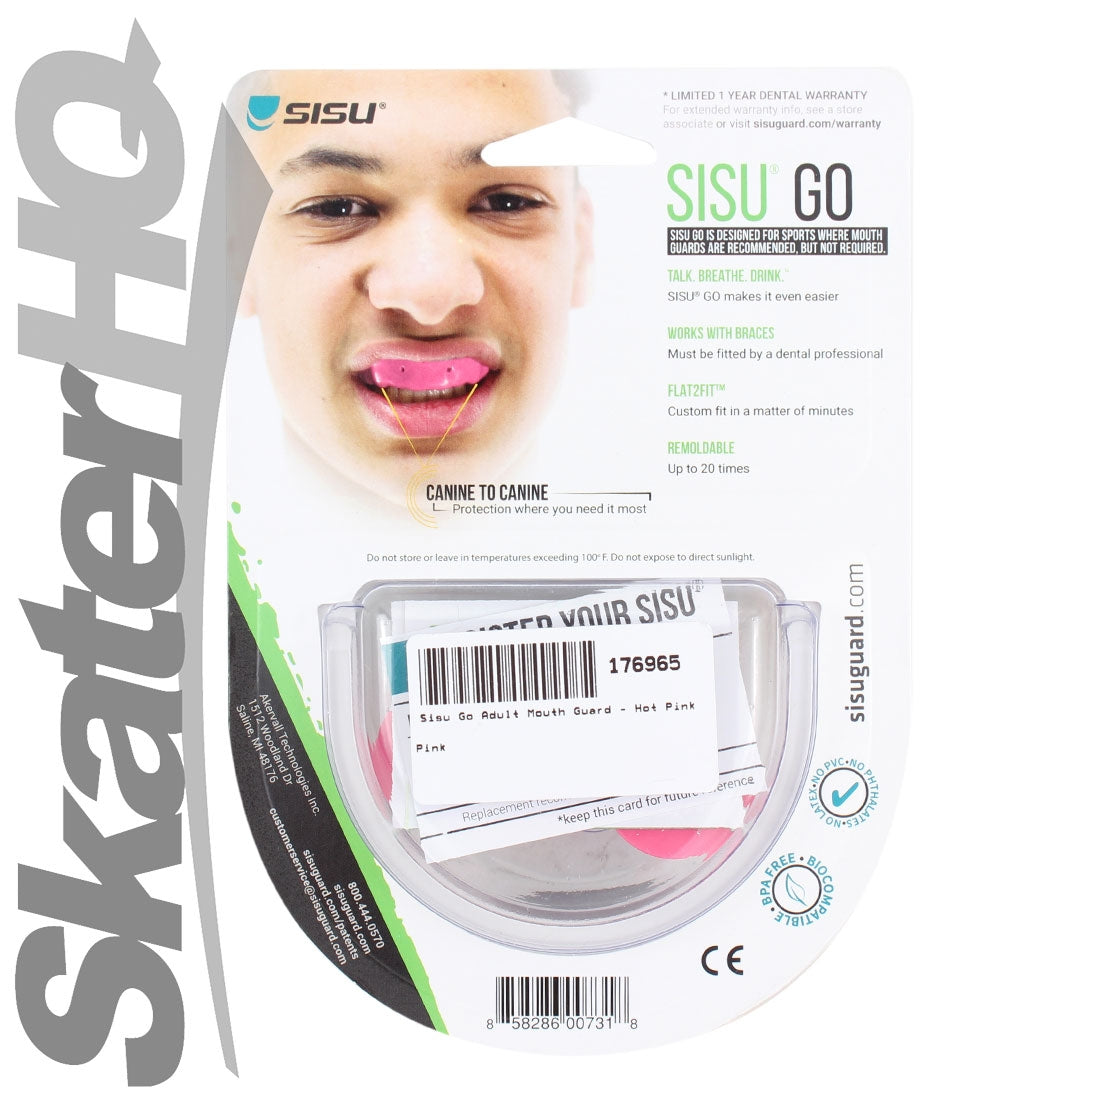 SISU GO Adult Mouthguard - Hot Pink Protective Mouthguards